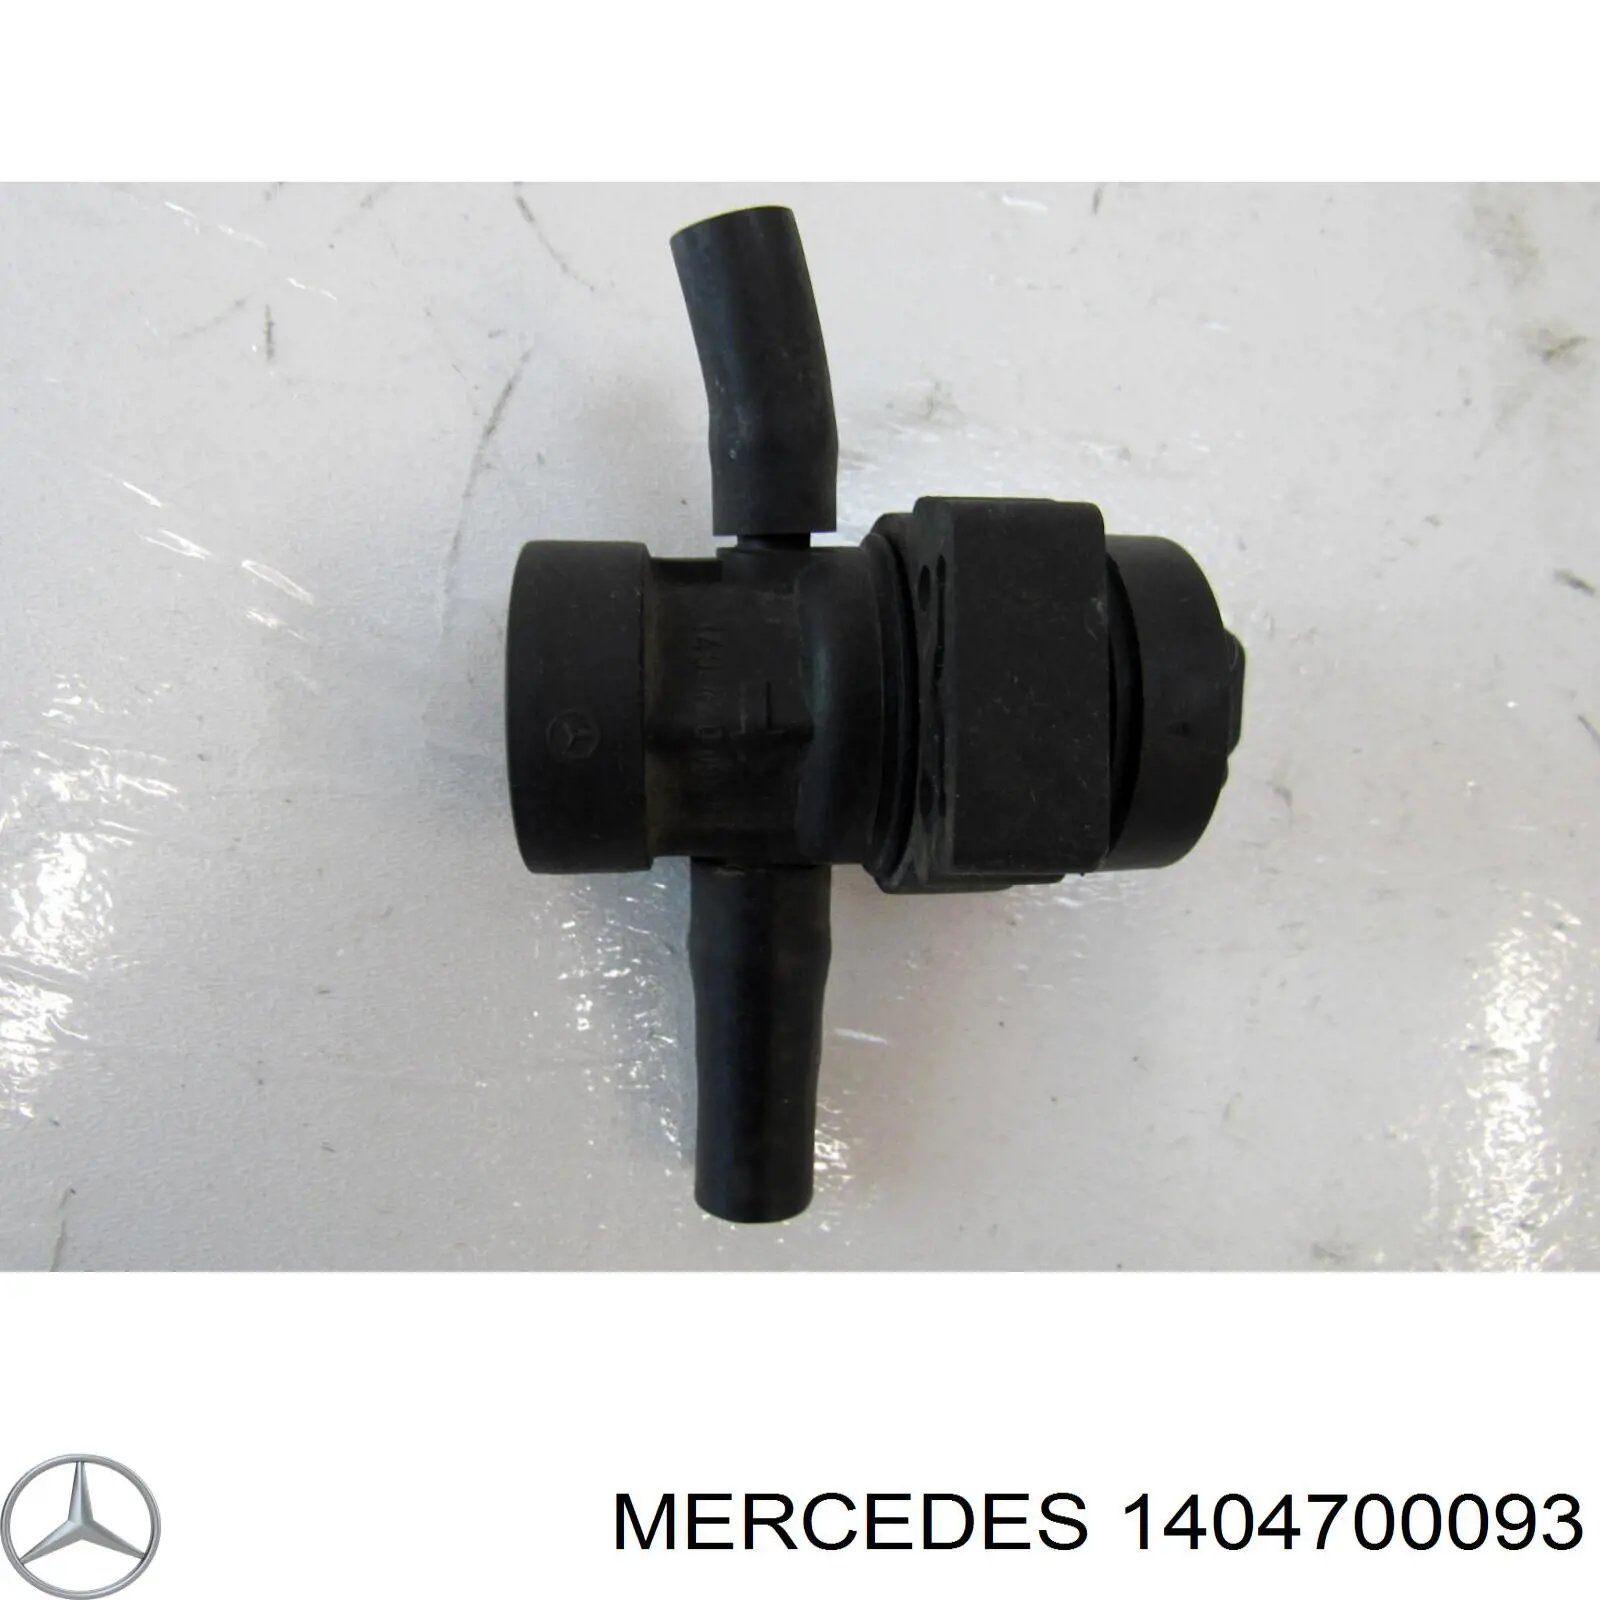 1404700093 Mercedes valvula de adsorcion de vapor de combustible